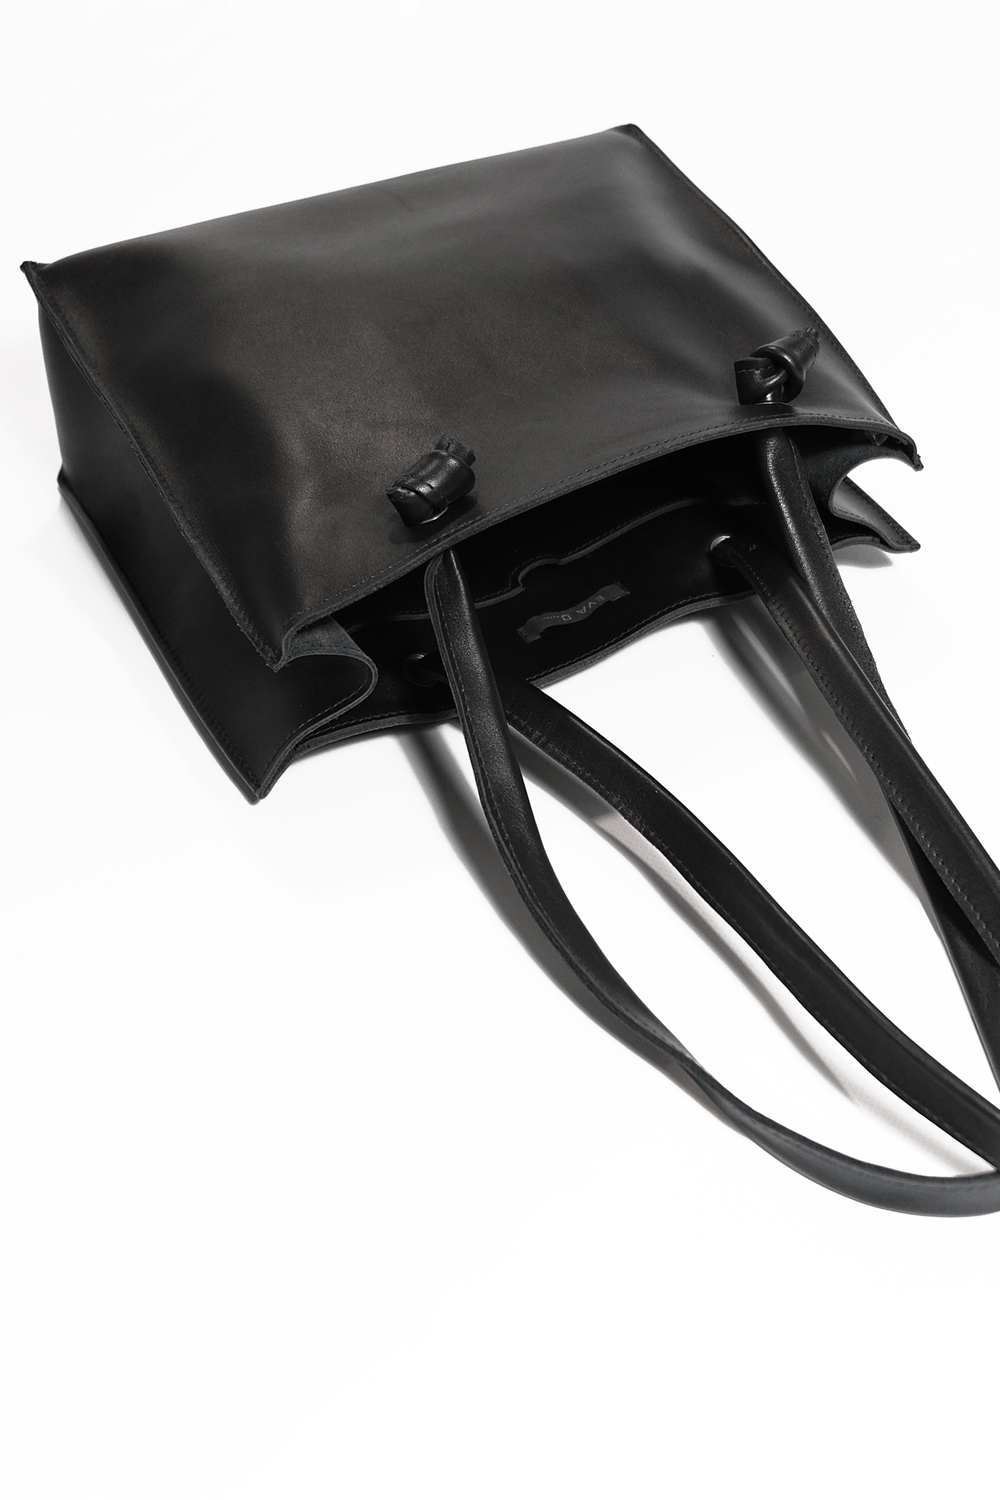 Leather Tote Bag Black ‘Grocery Bag’ small - Studio EVA D.